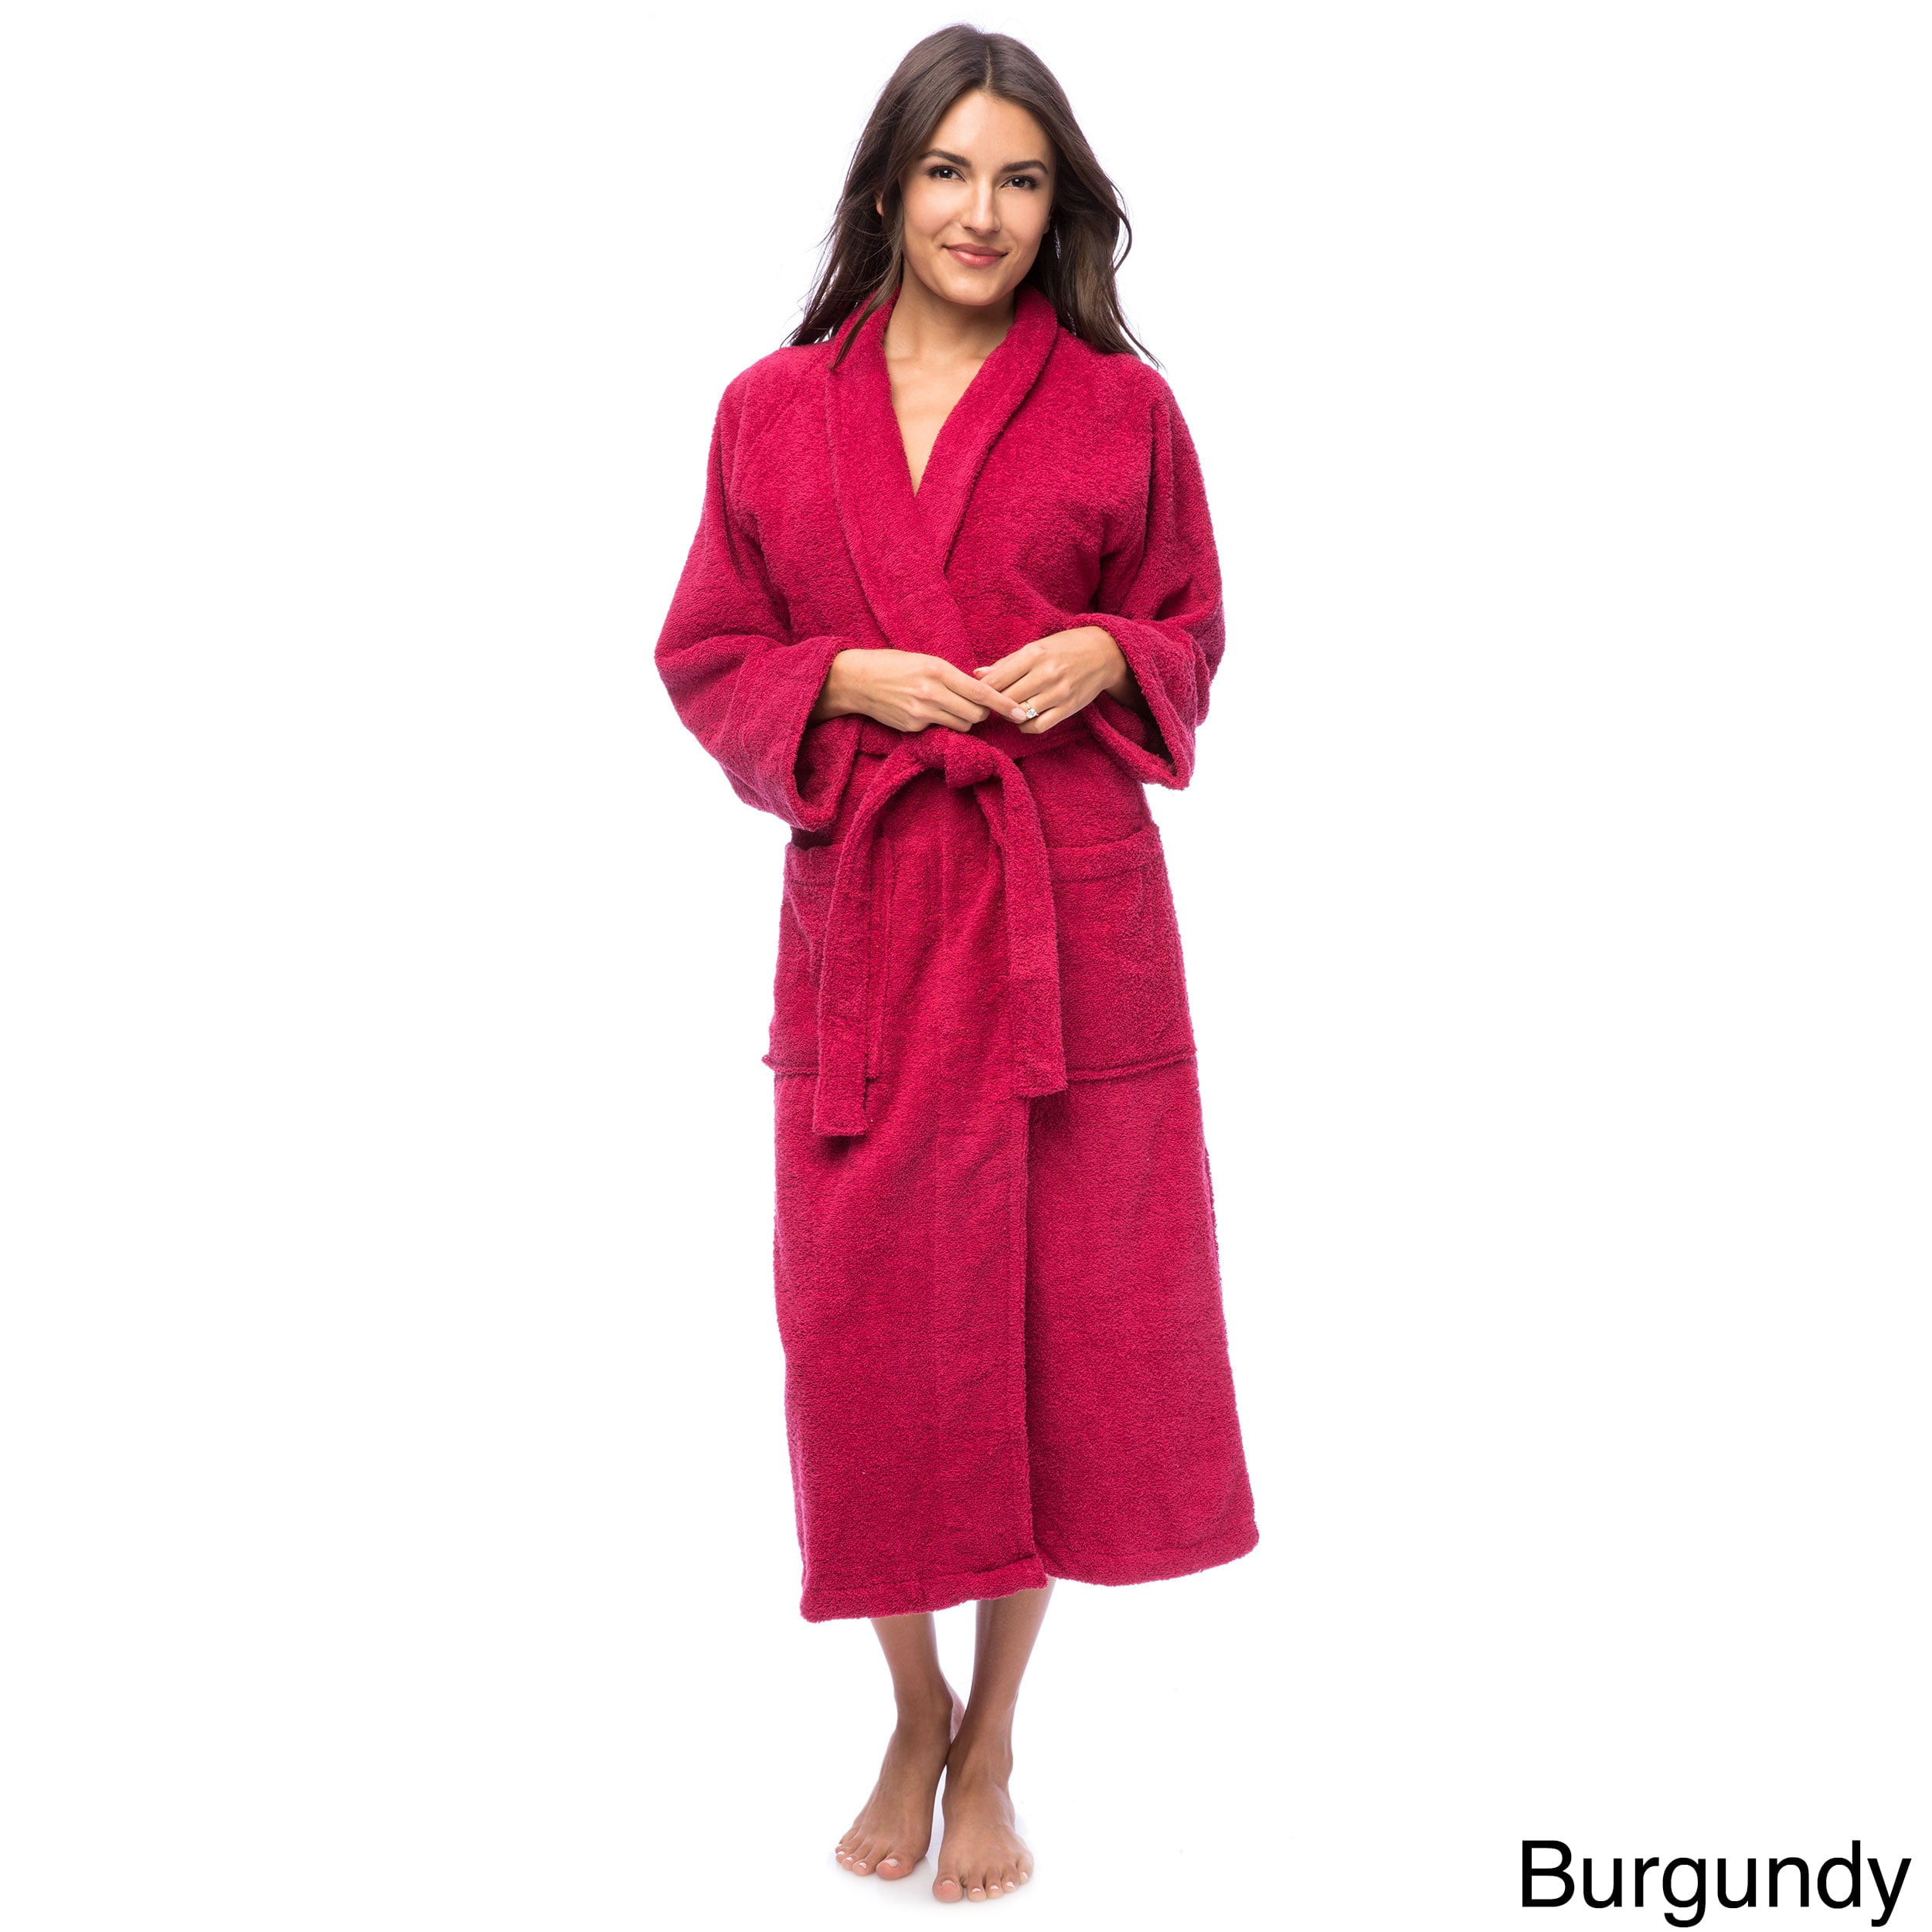 Luxury Egyptian Cotton Hooded Bath Robe Unisex Dressing Gown Nightwear Toweling 